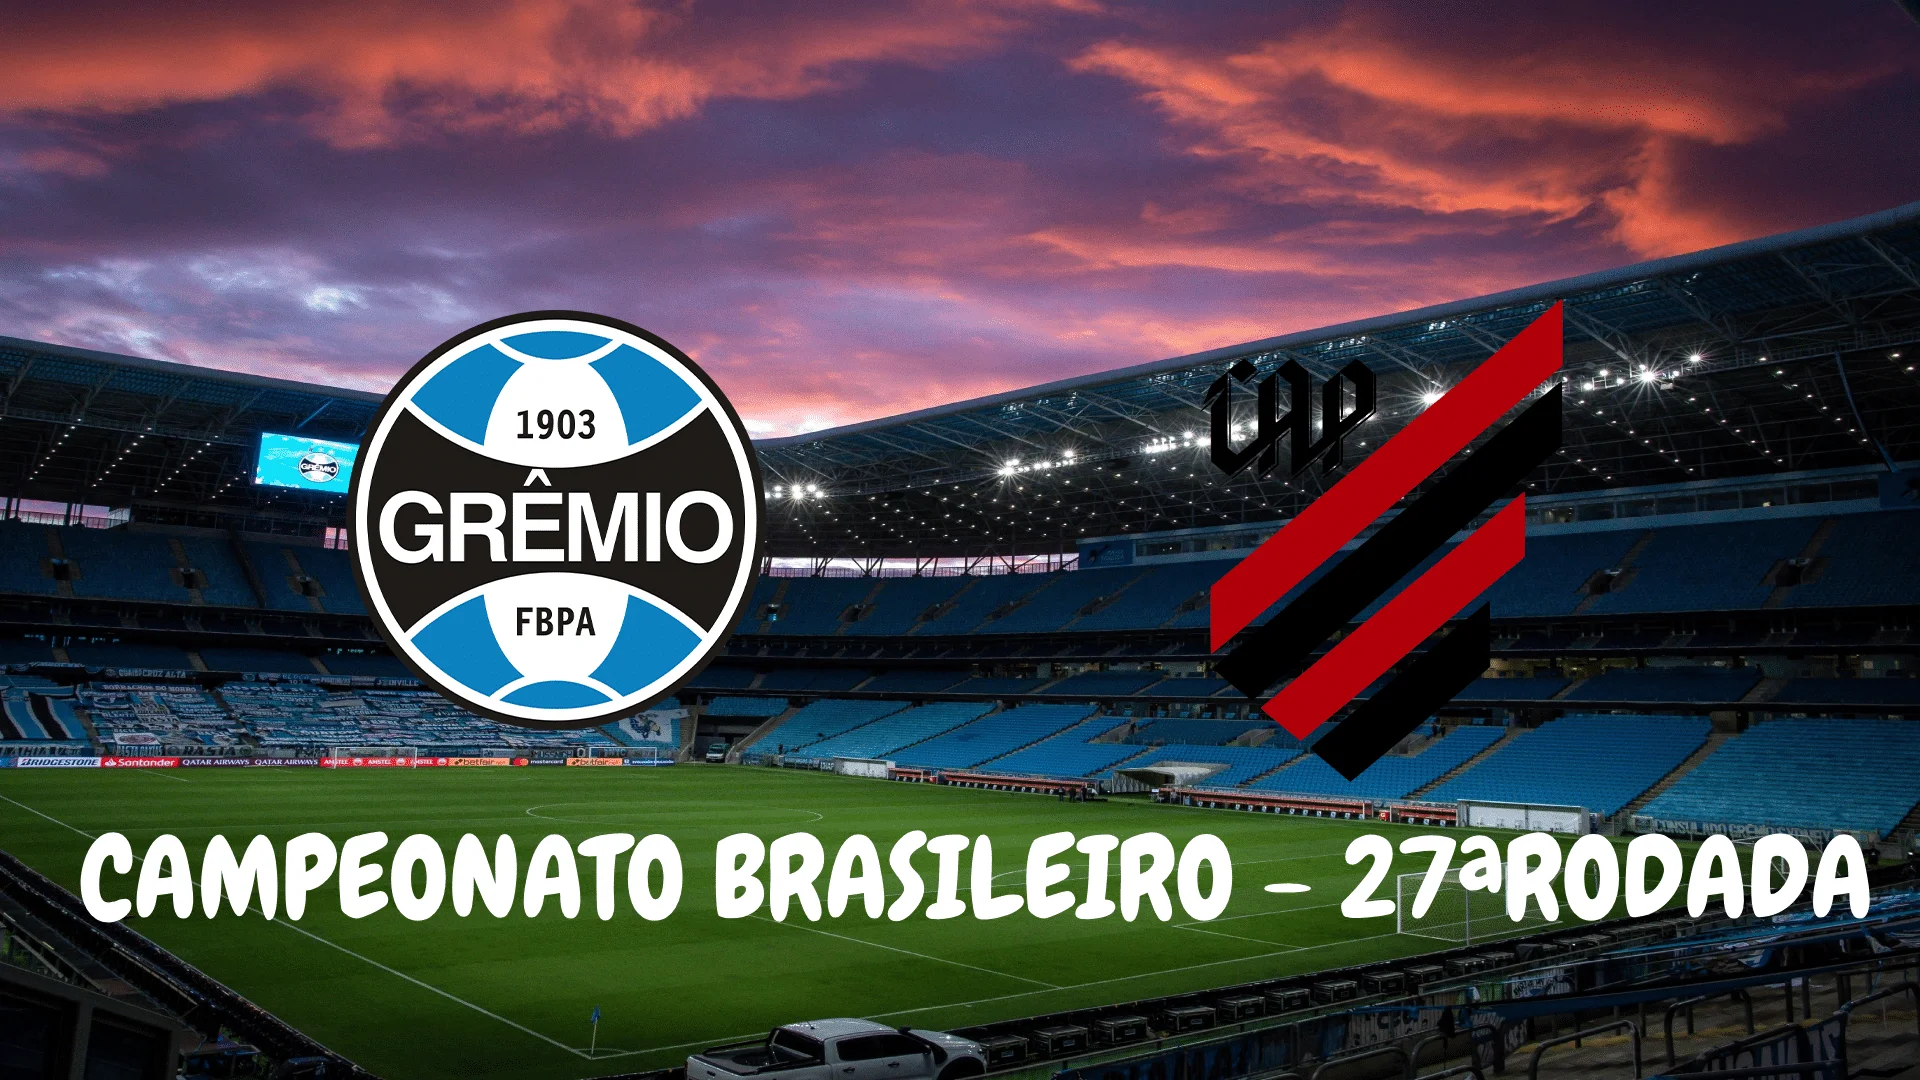 Grêmio vs Caxias: A Rivalry Steeped in History